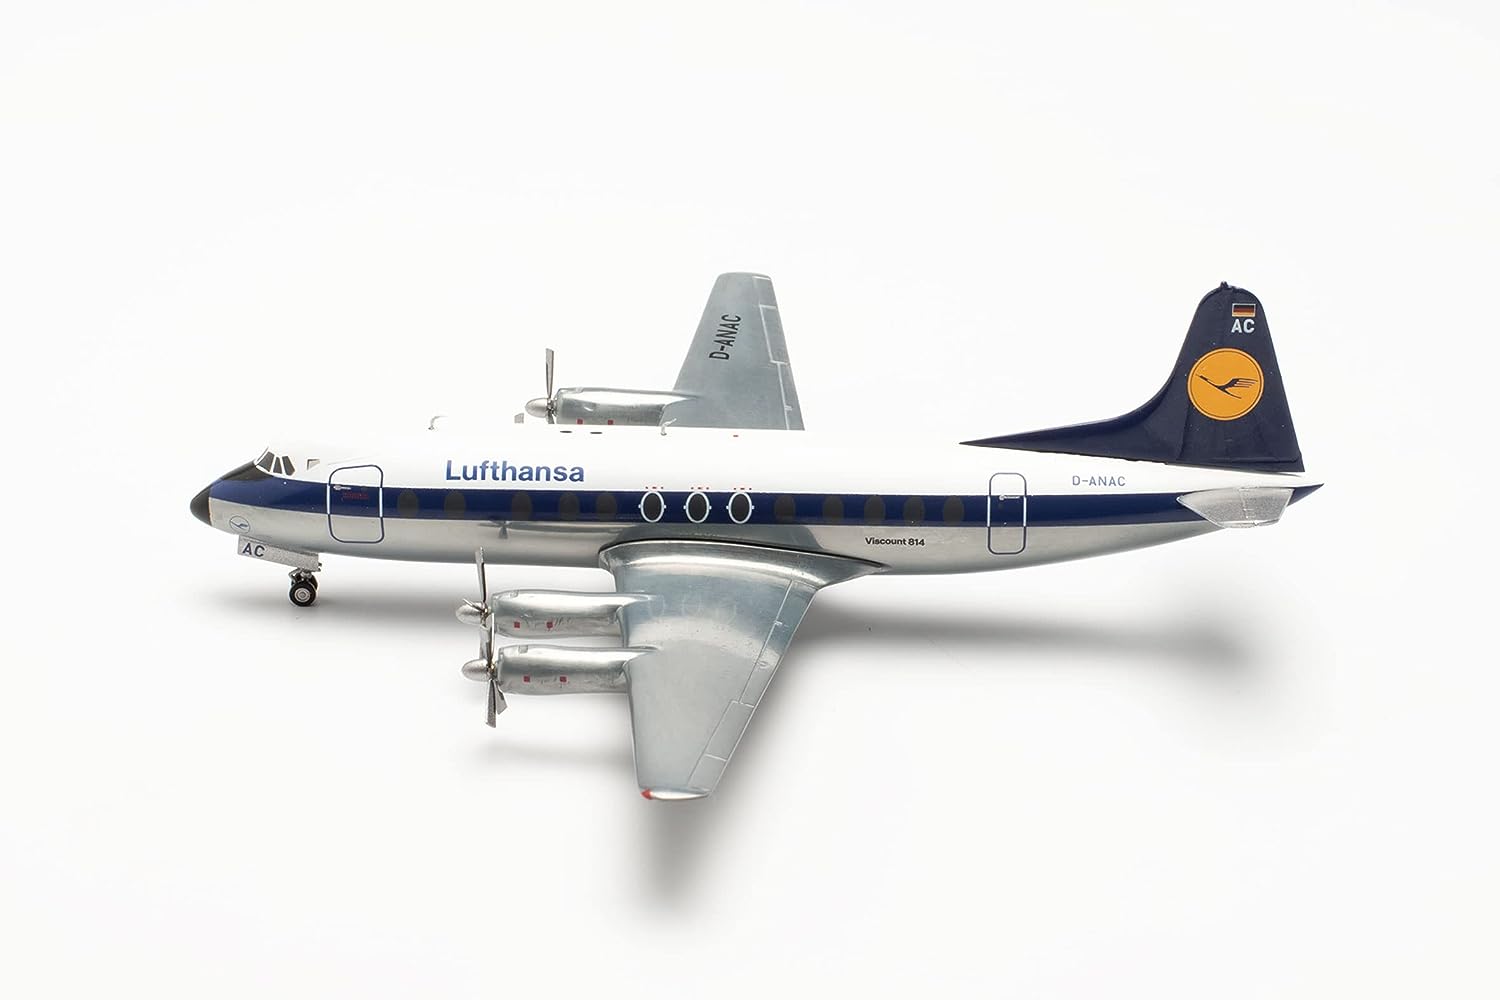   Vickers Viscount 800 Lufthansa, 1:200, herpa 572255. # 2 hobbyplus.ru